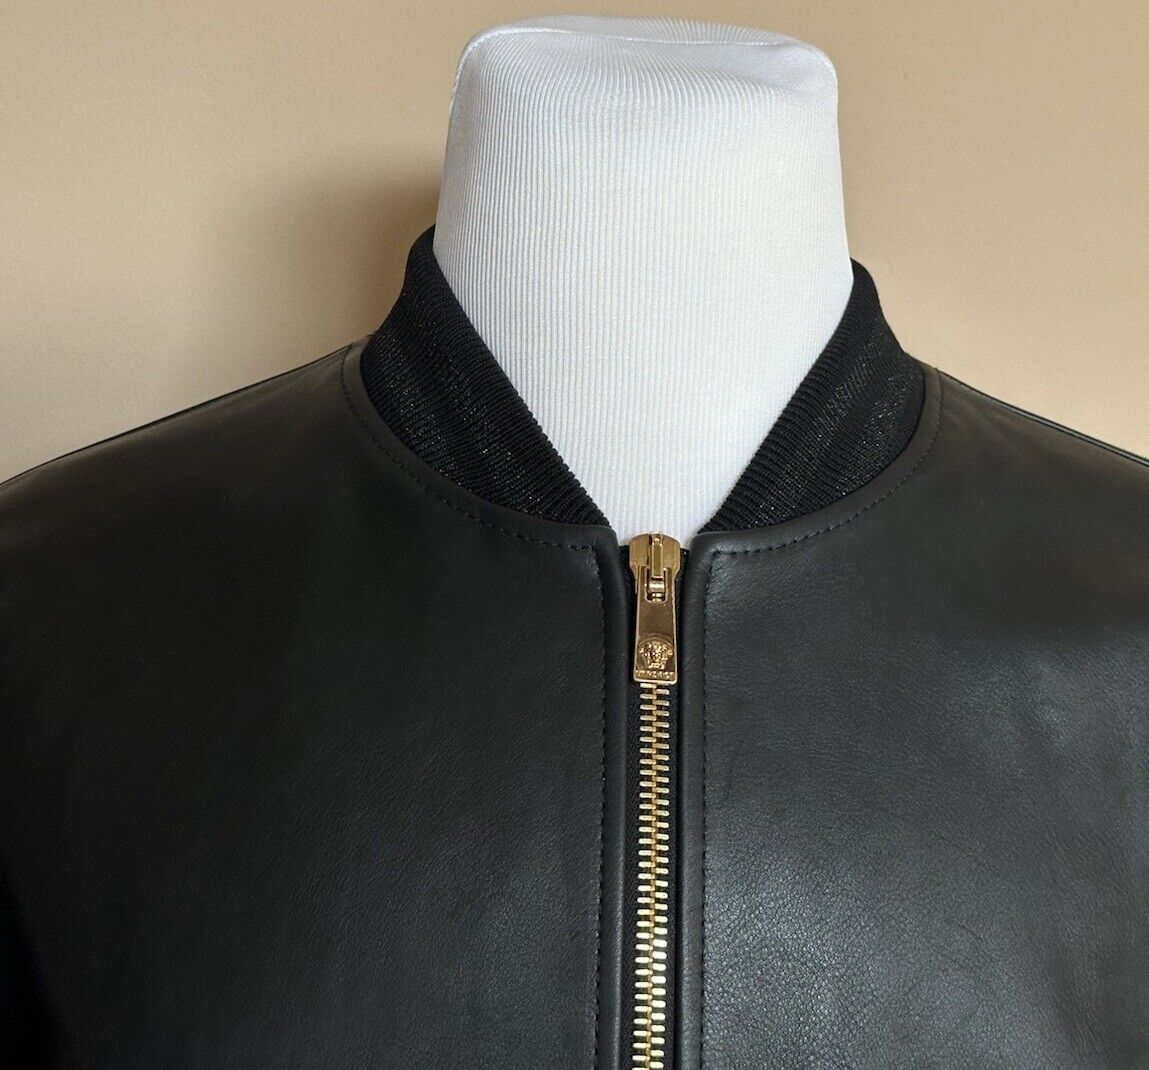 Versace Men's Calf Leather Heavy Jacket Black 40 US (50 Eu) IT NWT $3625 1007634